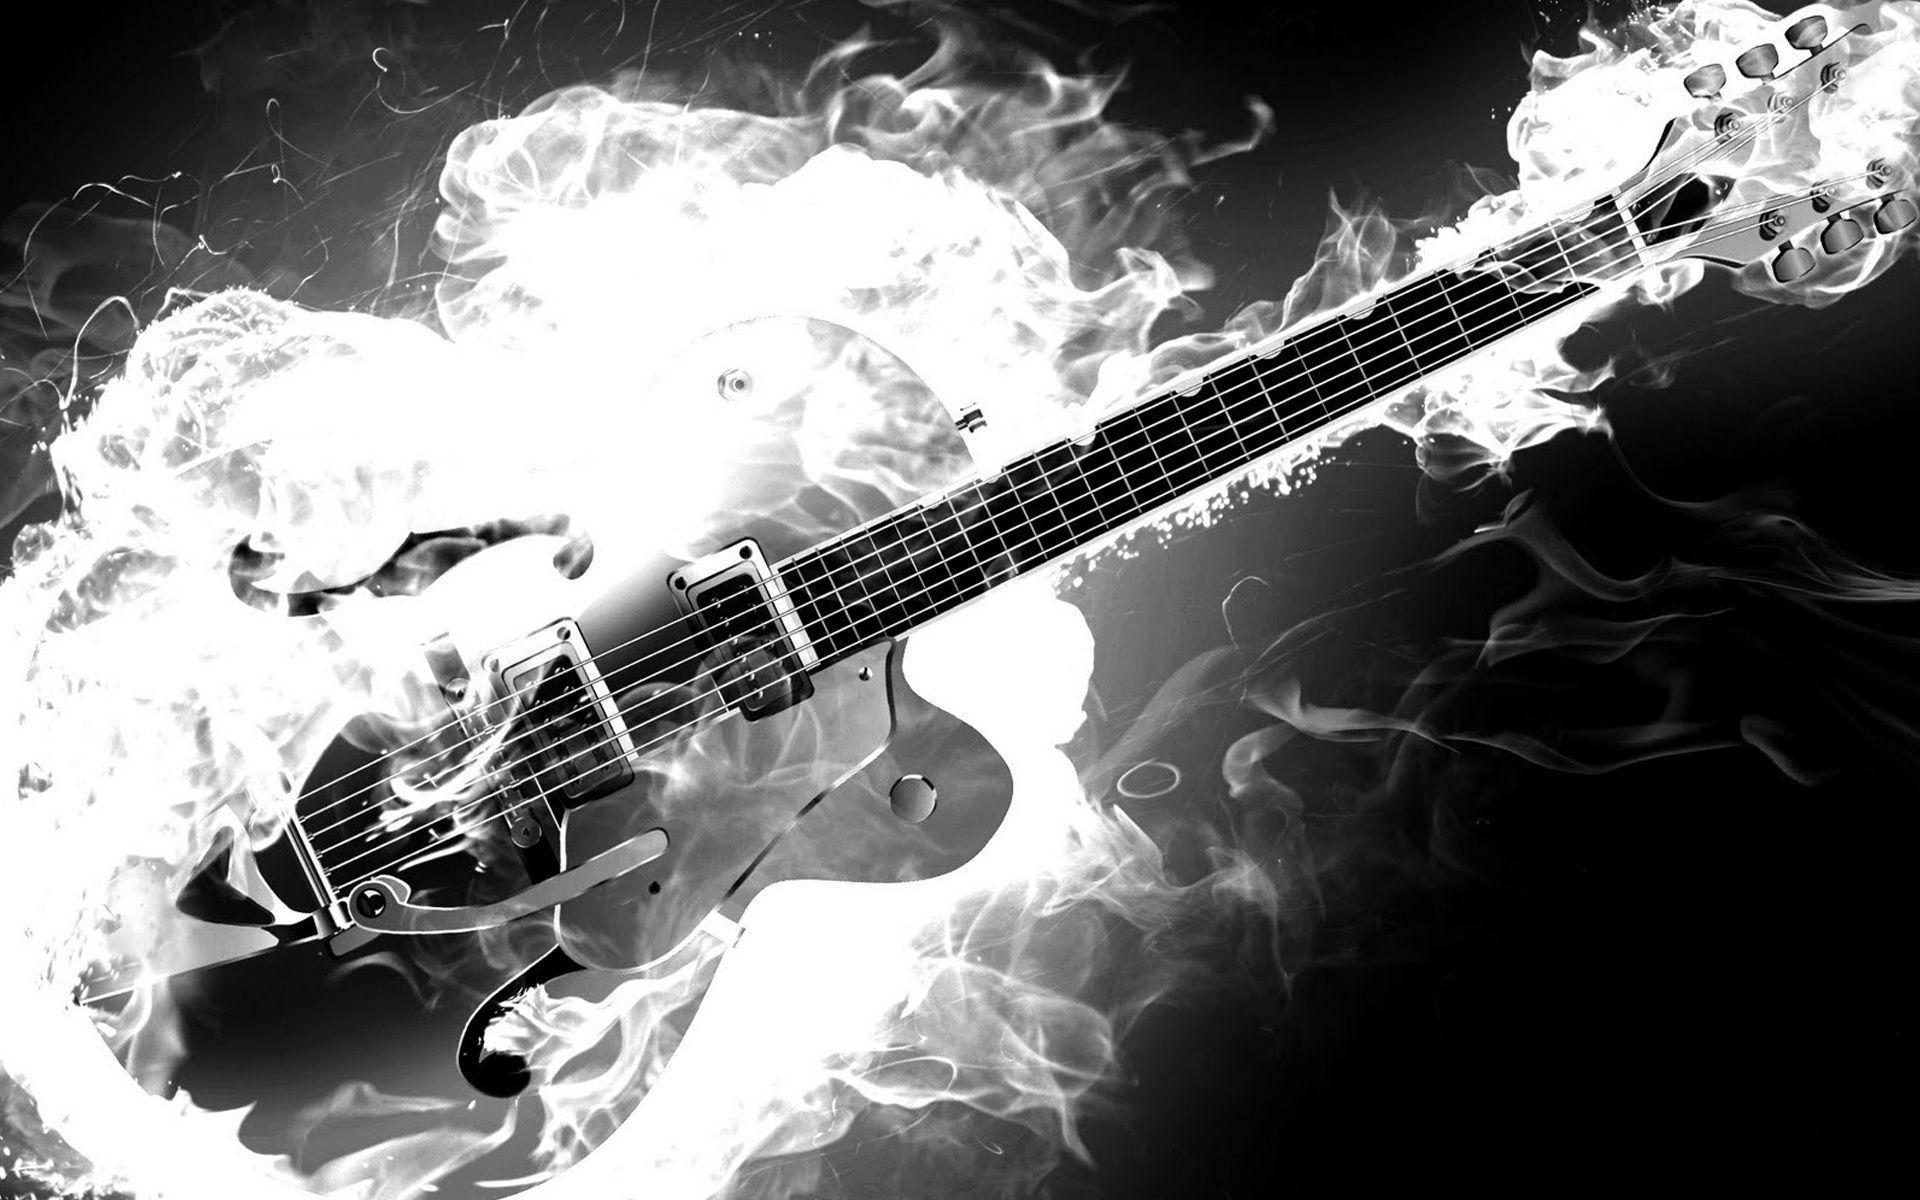 Guitar Image Free 151581 High Definition Wallpaper. Suwall